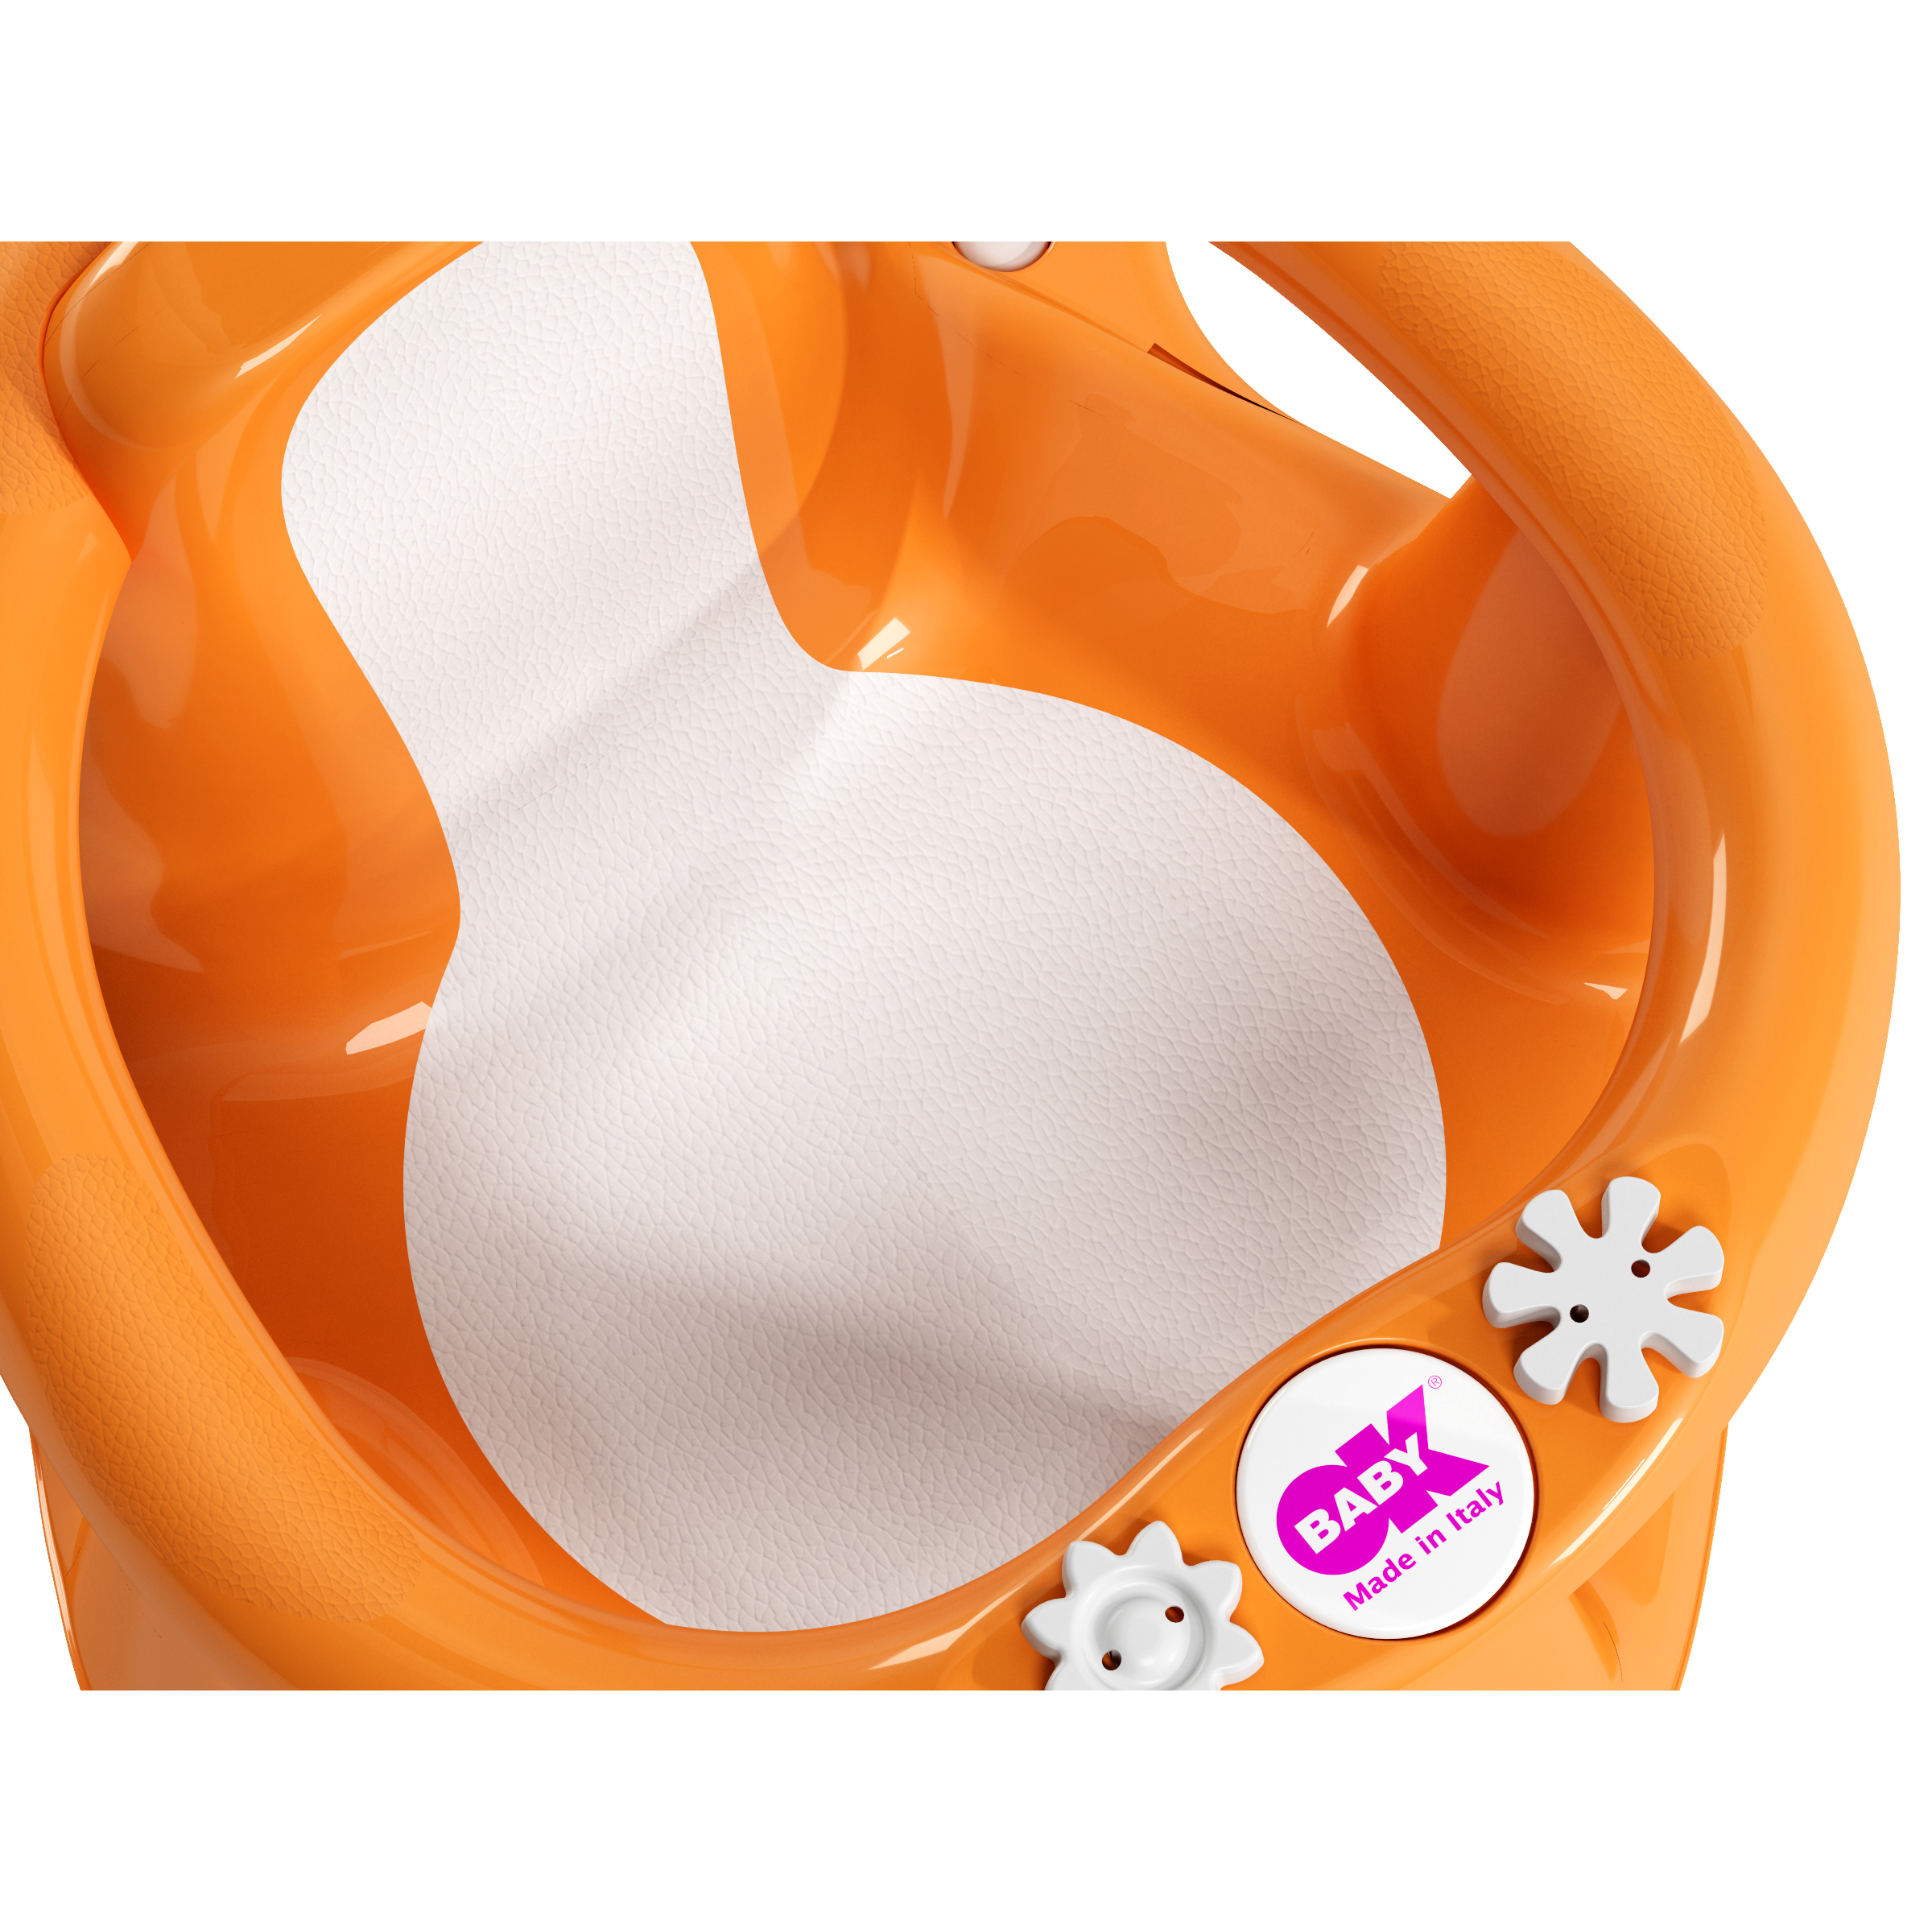 Flipper Evolution siège de bain Orange de OK Baby, Fauteuils de bain :  Aubert Suisse